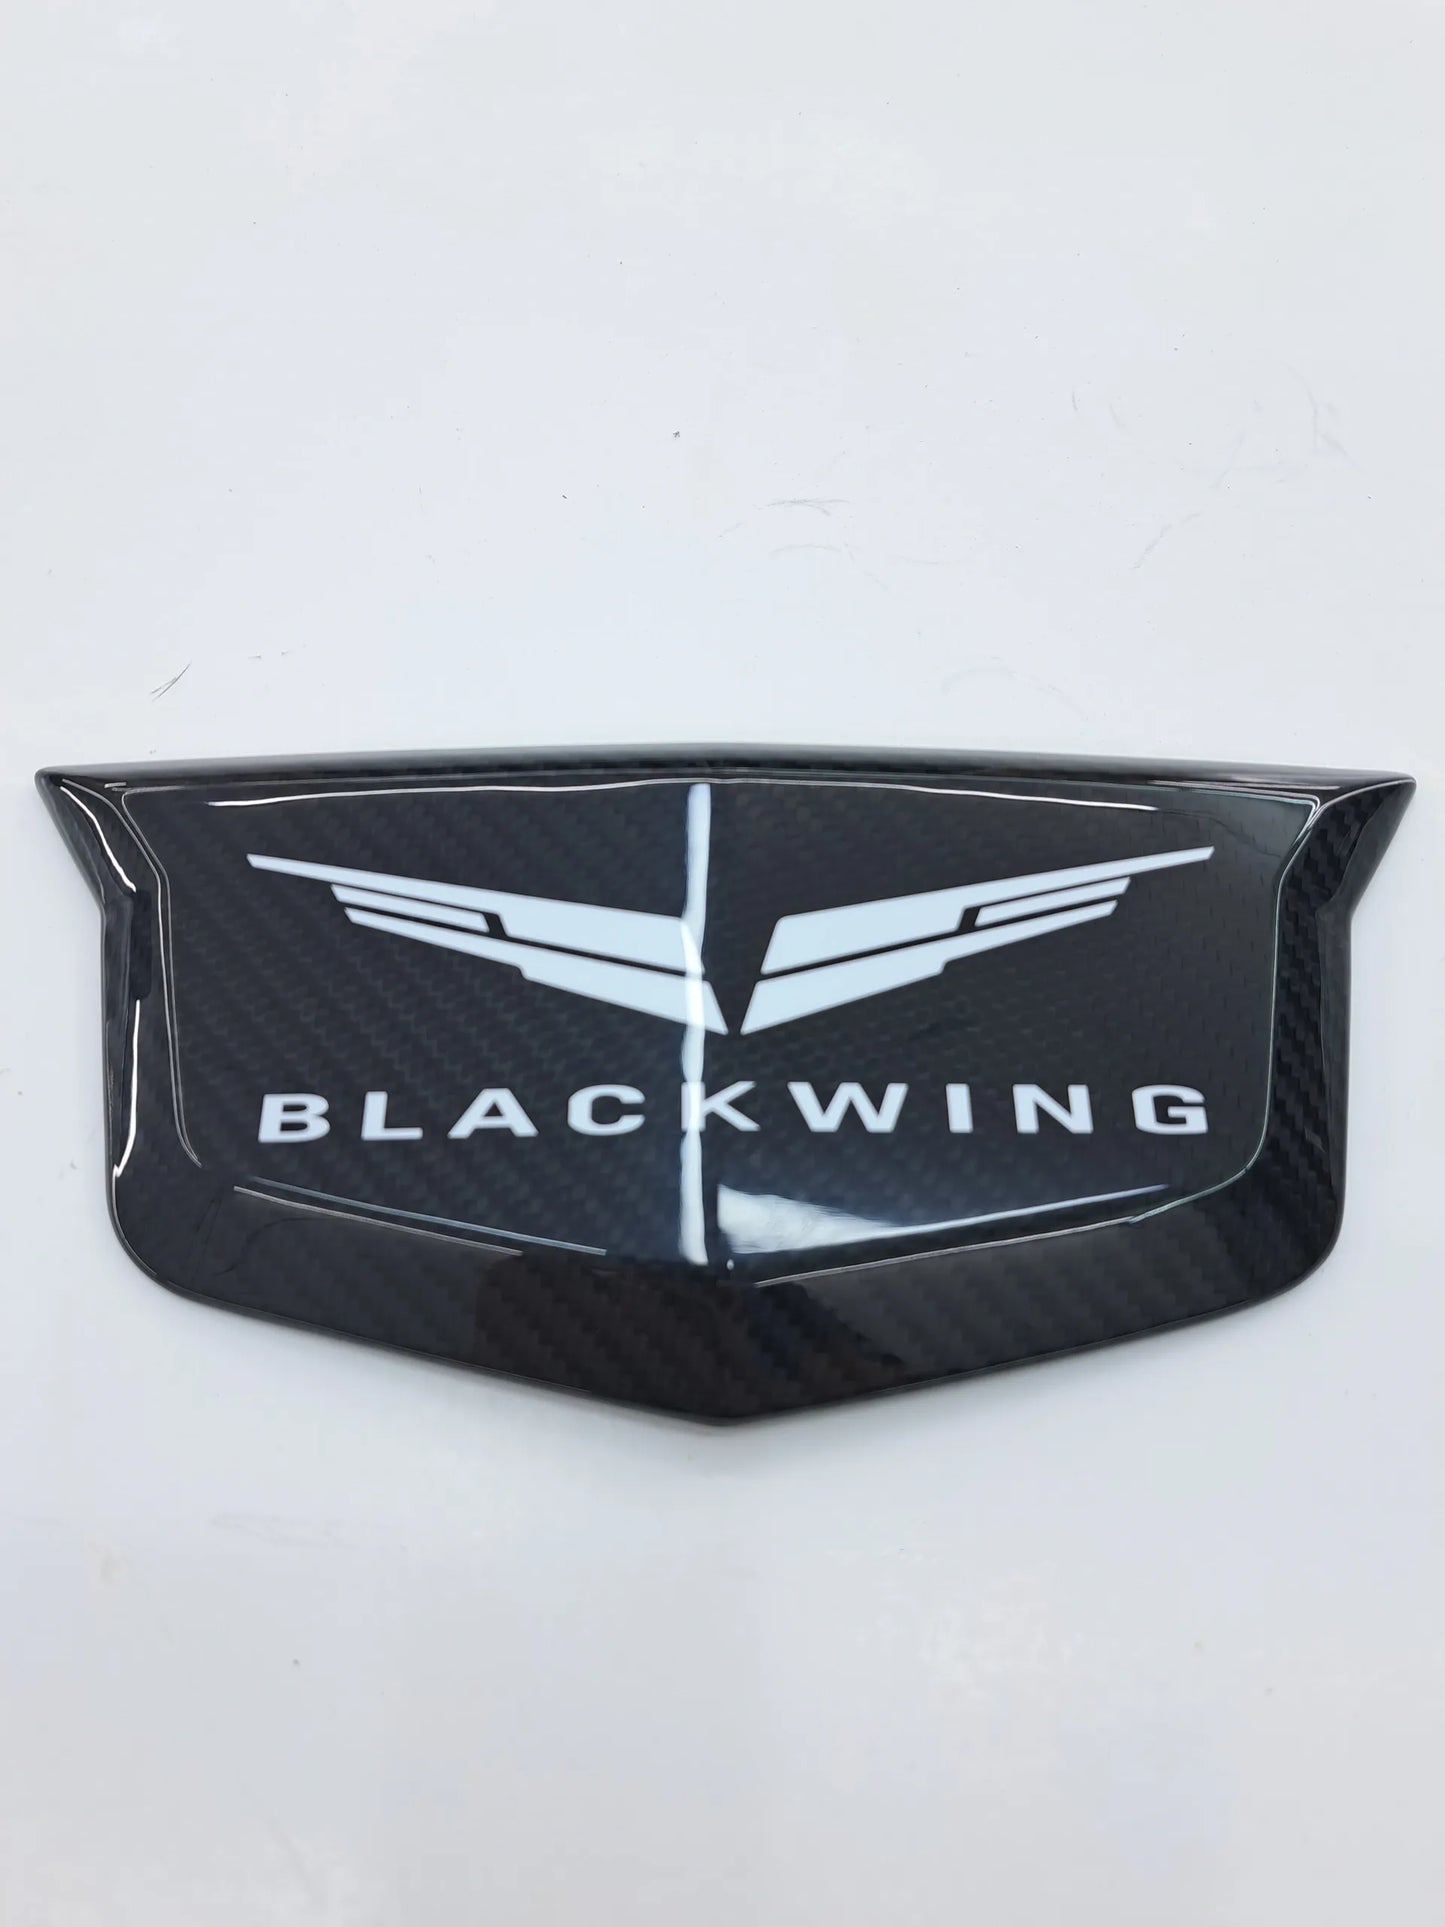 CT5-V Blackwing Front Genuine Carbon Fiber "Blackwing Logo" Cadillac Shield Cover